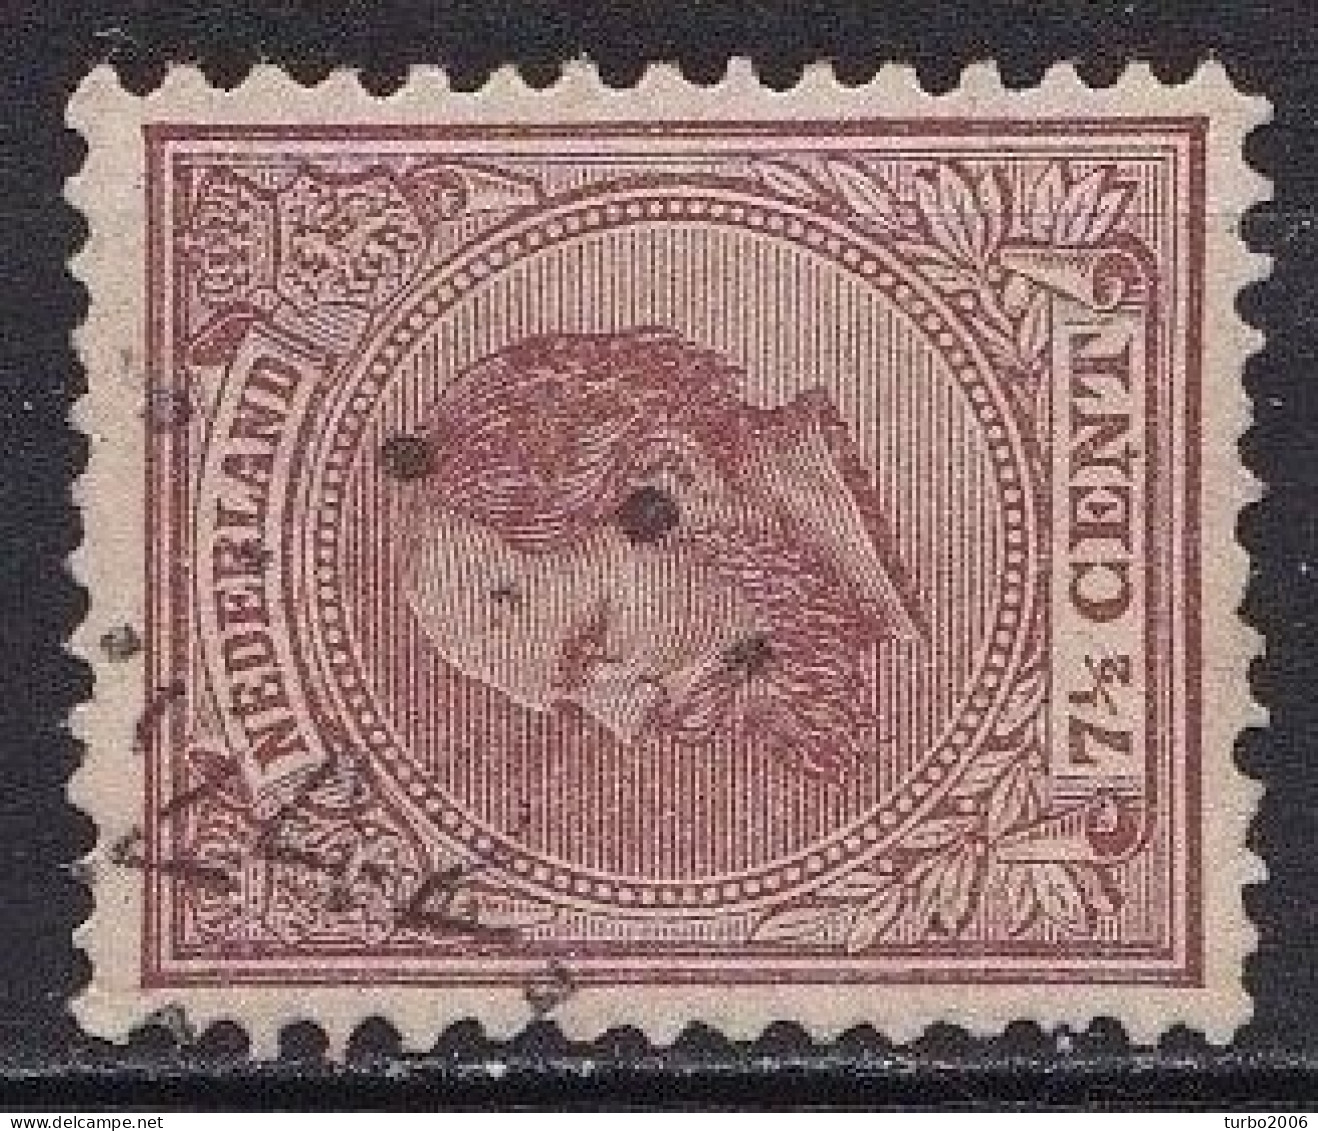 1872 Puntstempel 242 (Bussum) Op Koning Willem III  7½ Cent Bruin NVPH 20 - Poststempel